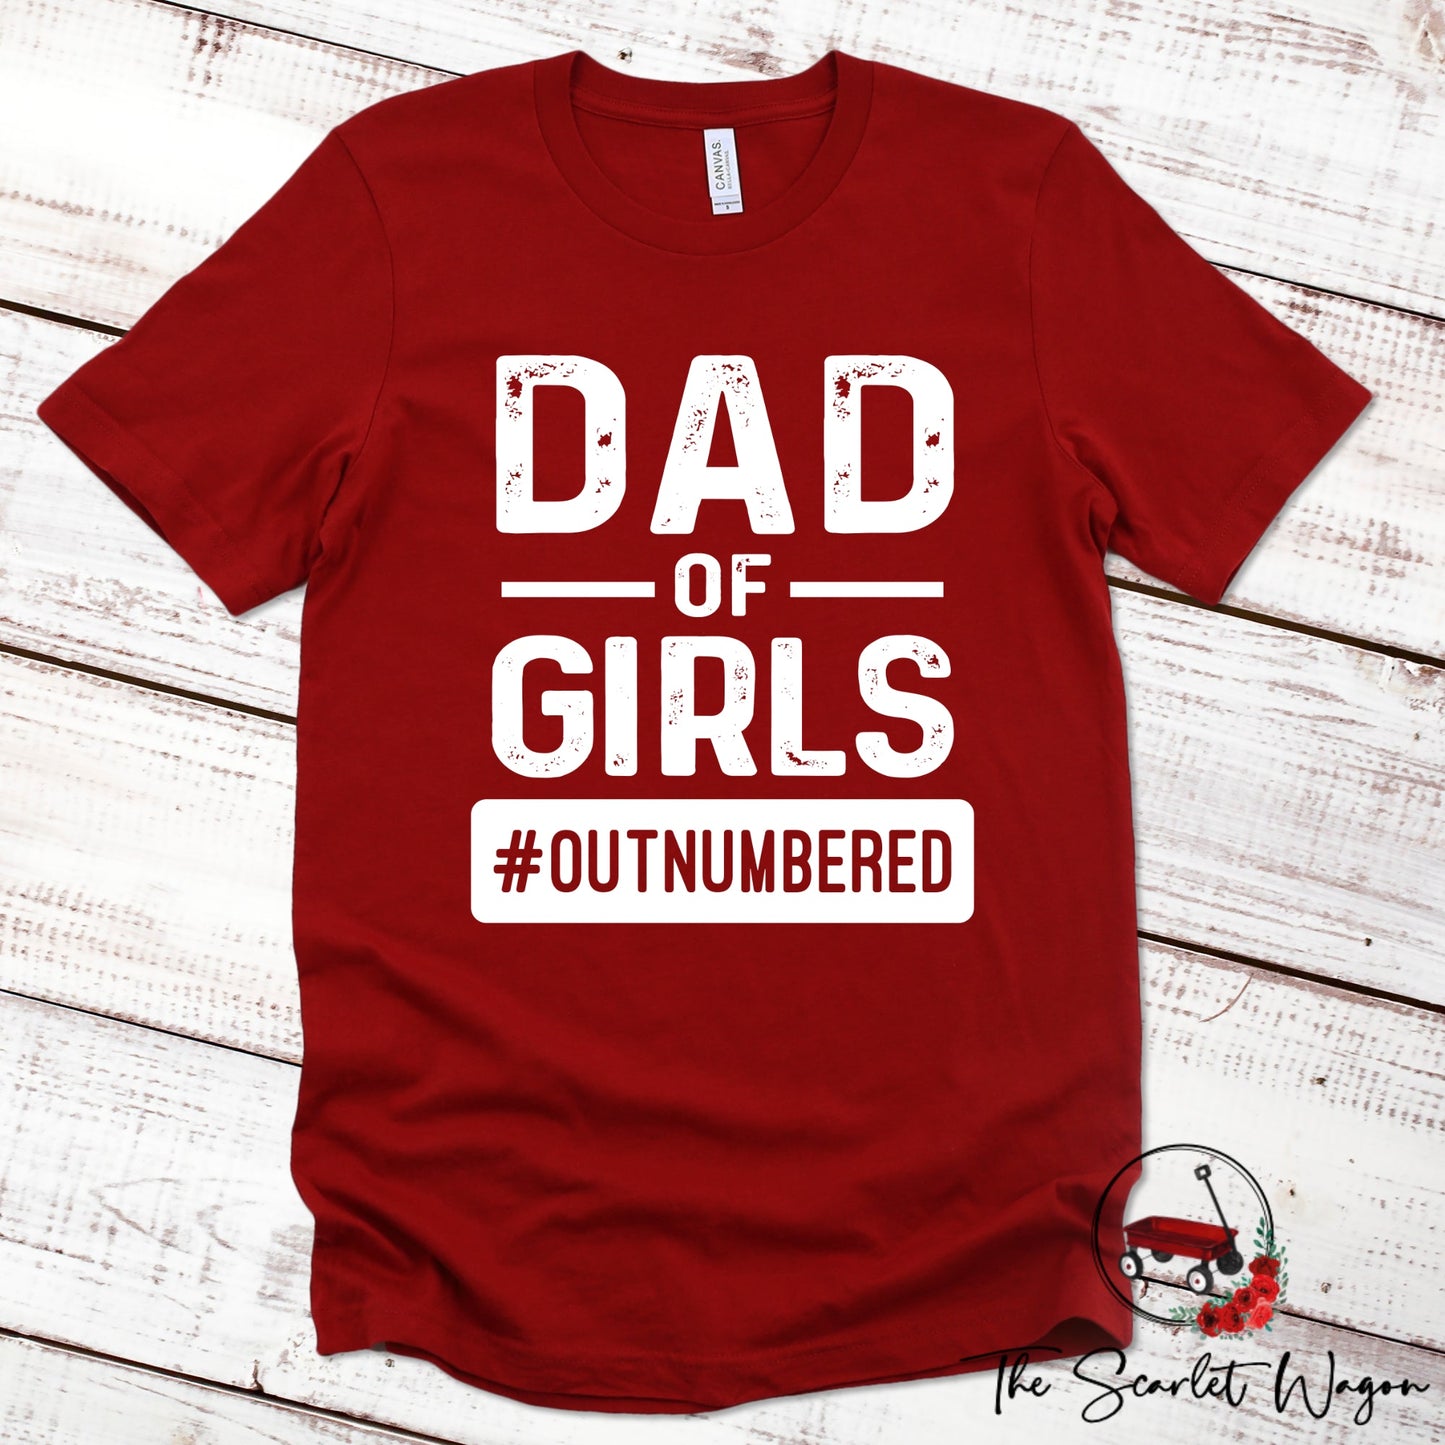 Dad of Girls #Outnumbered Premium Tee Scarlet Wagon Red XS 